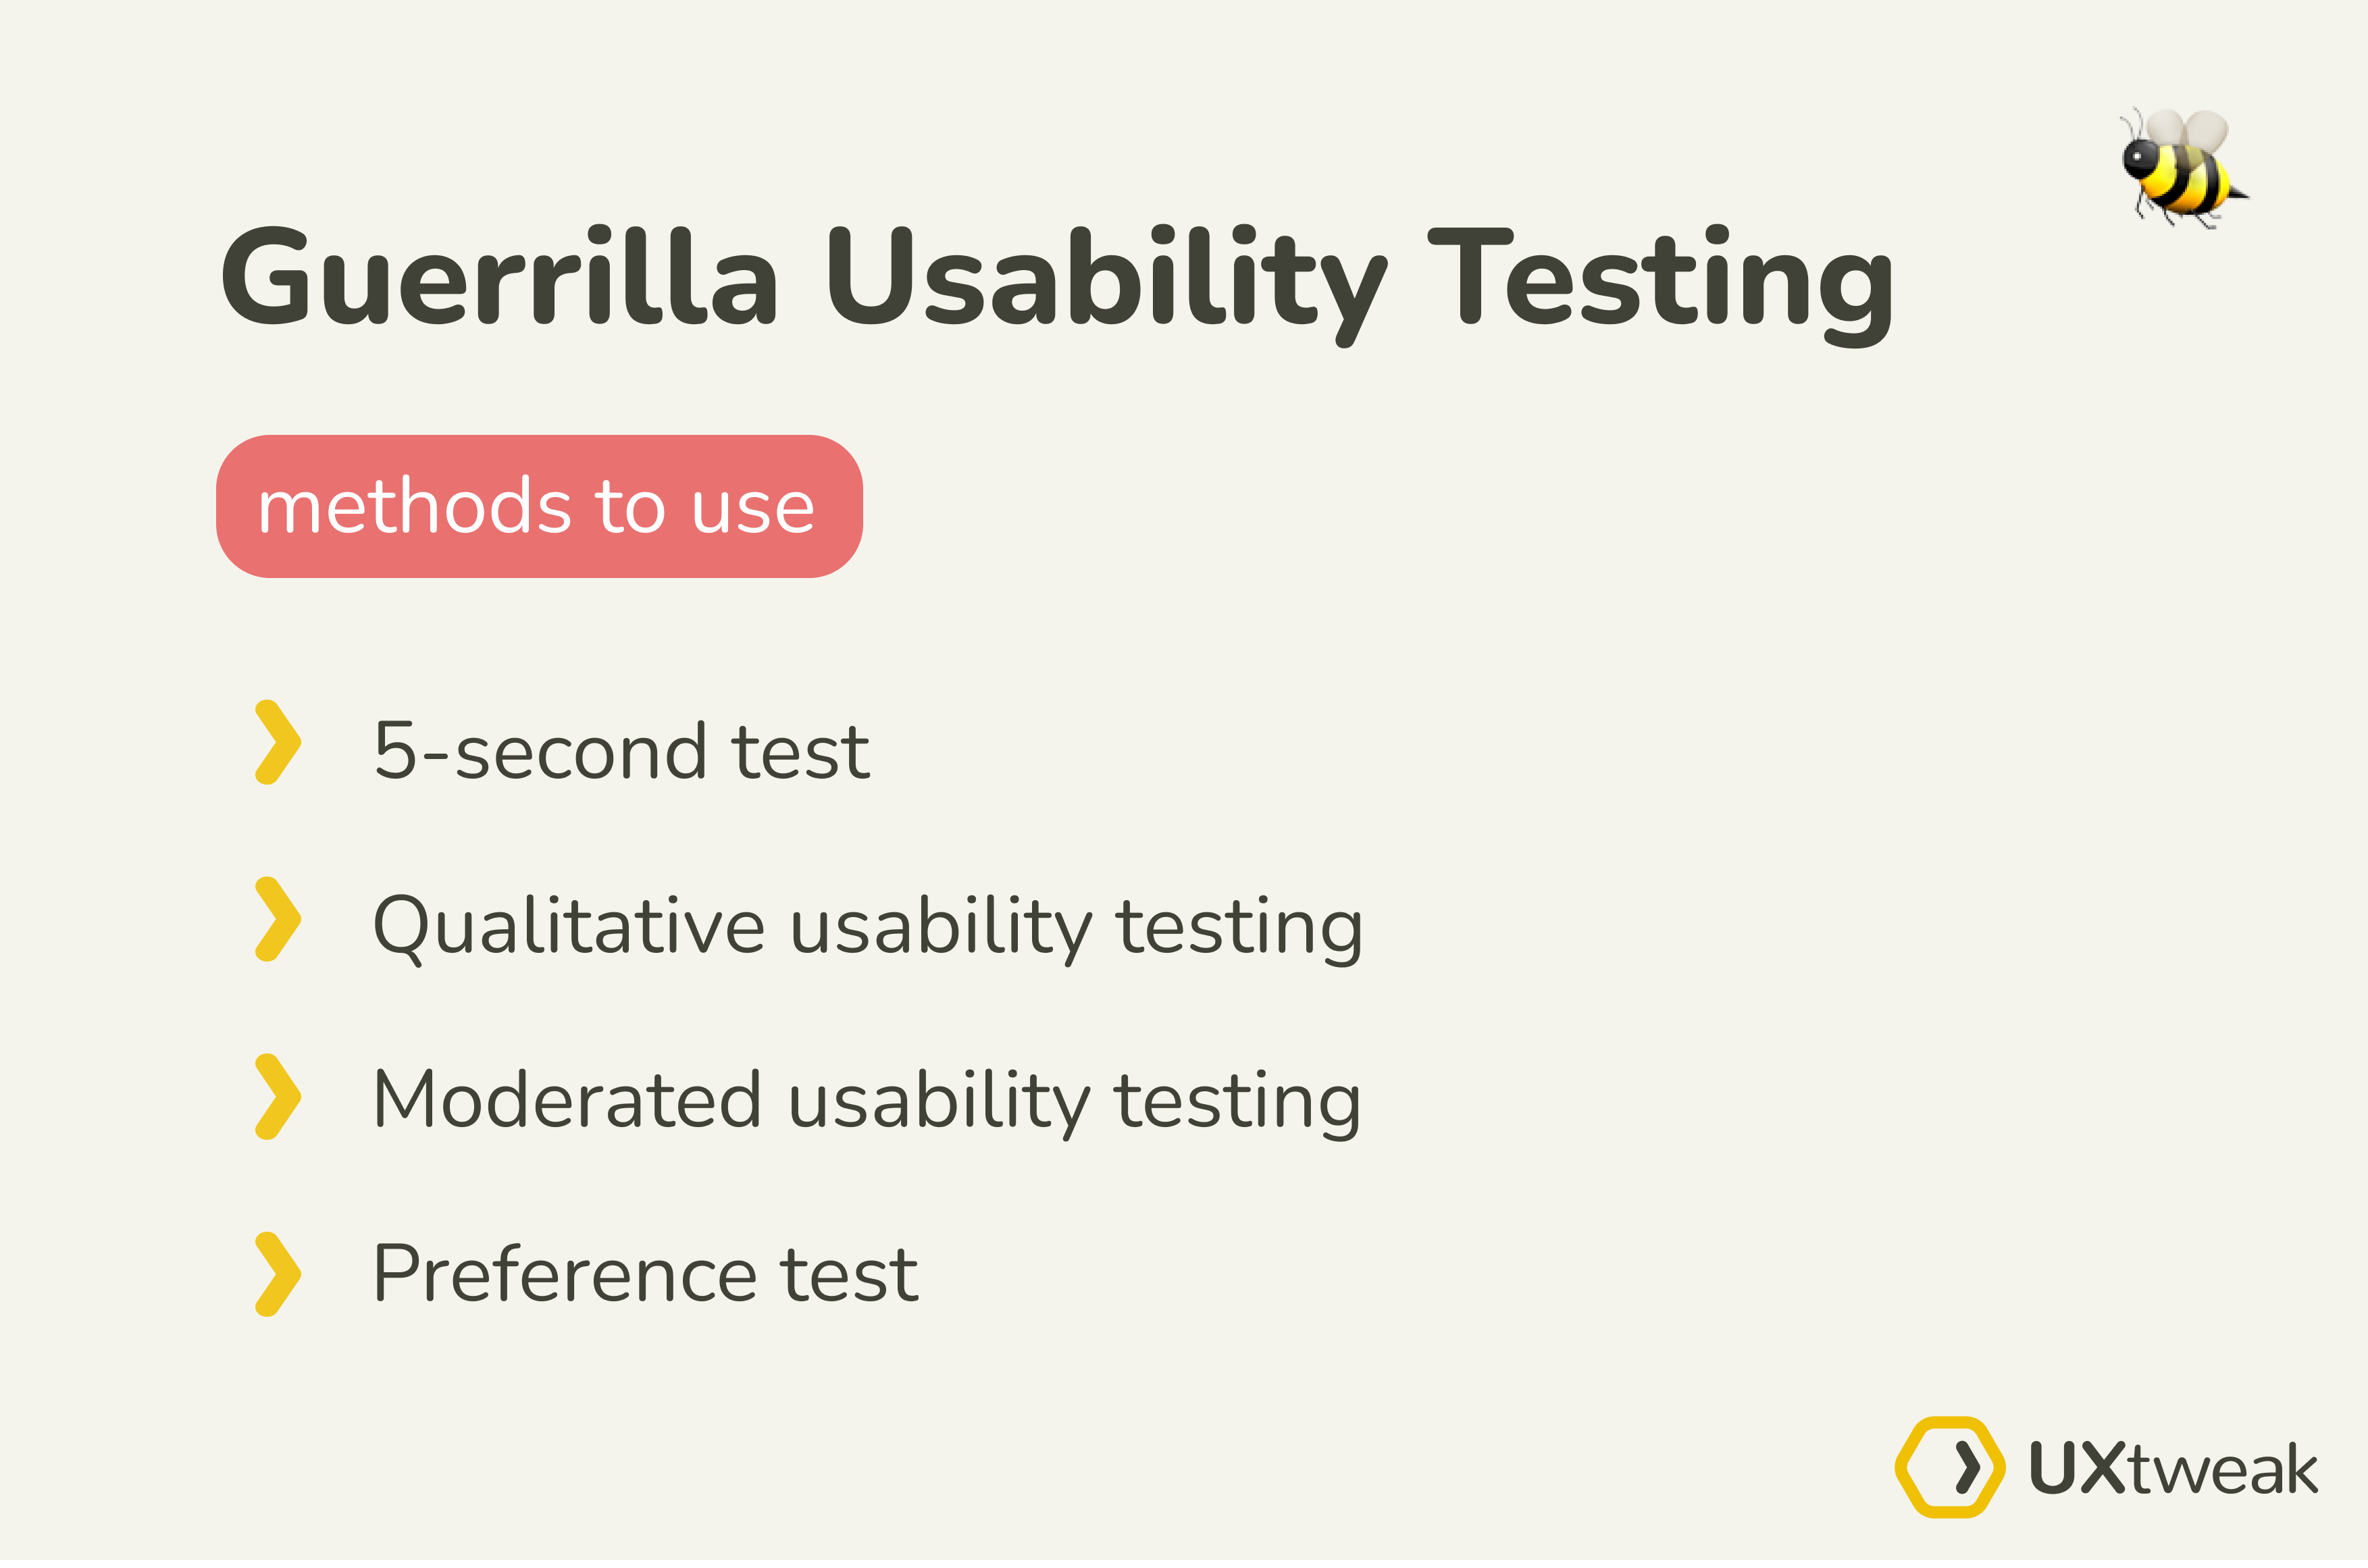 guerrilla usability testing